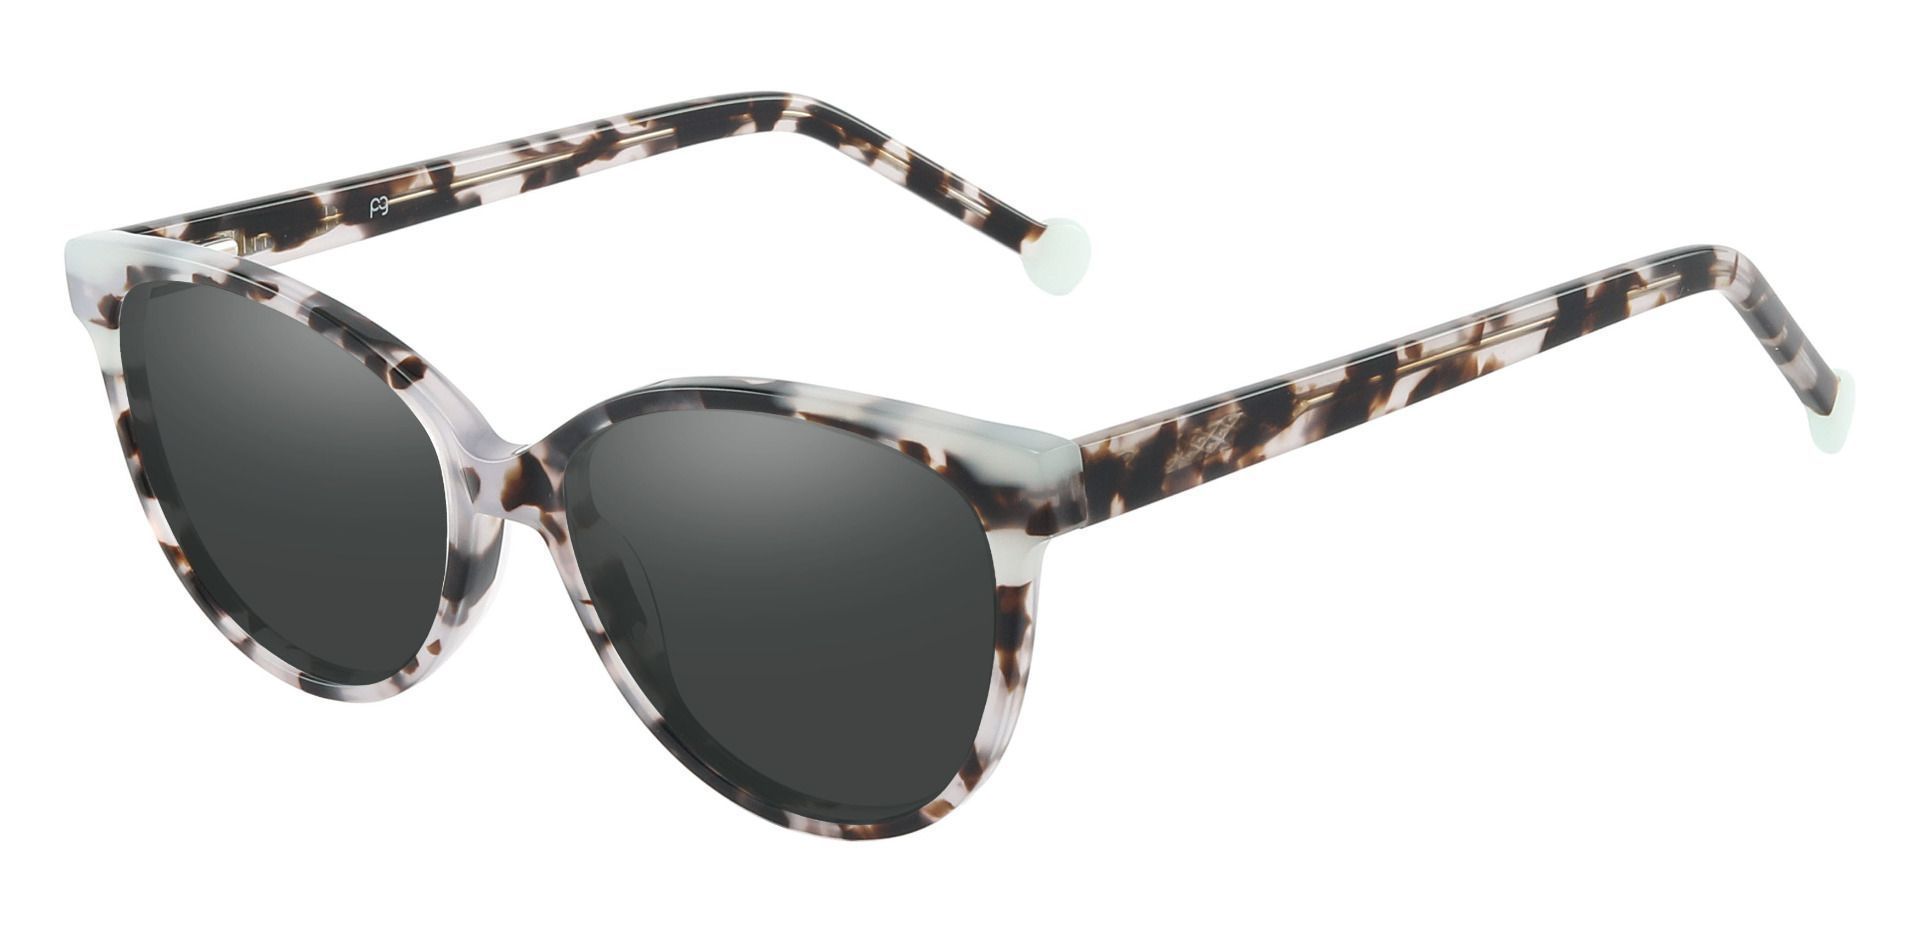 Wisdom Cat Eye Progressive Sunglasses - Multi Color Frame With Gray Lenses